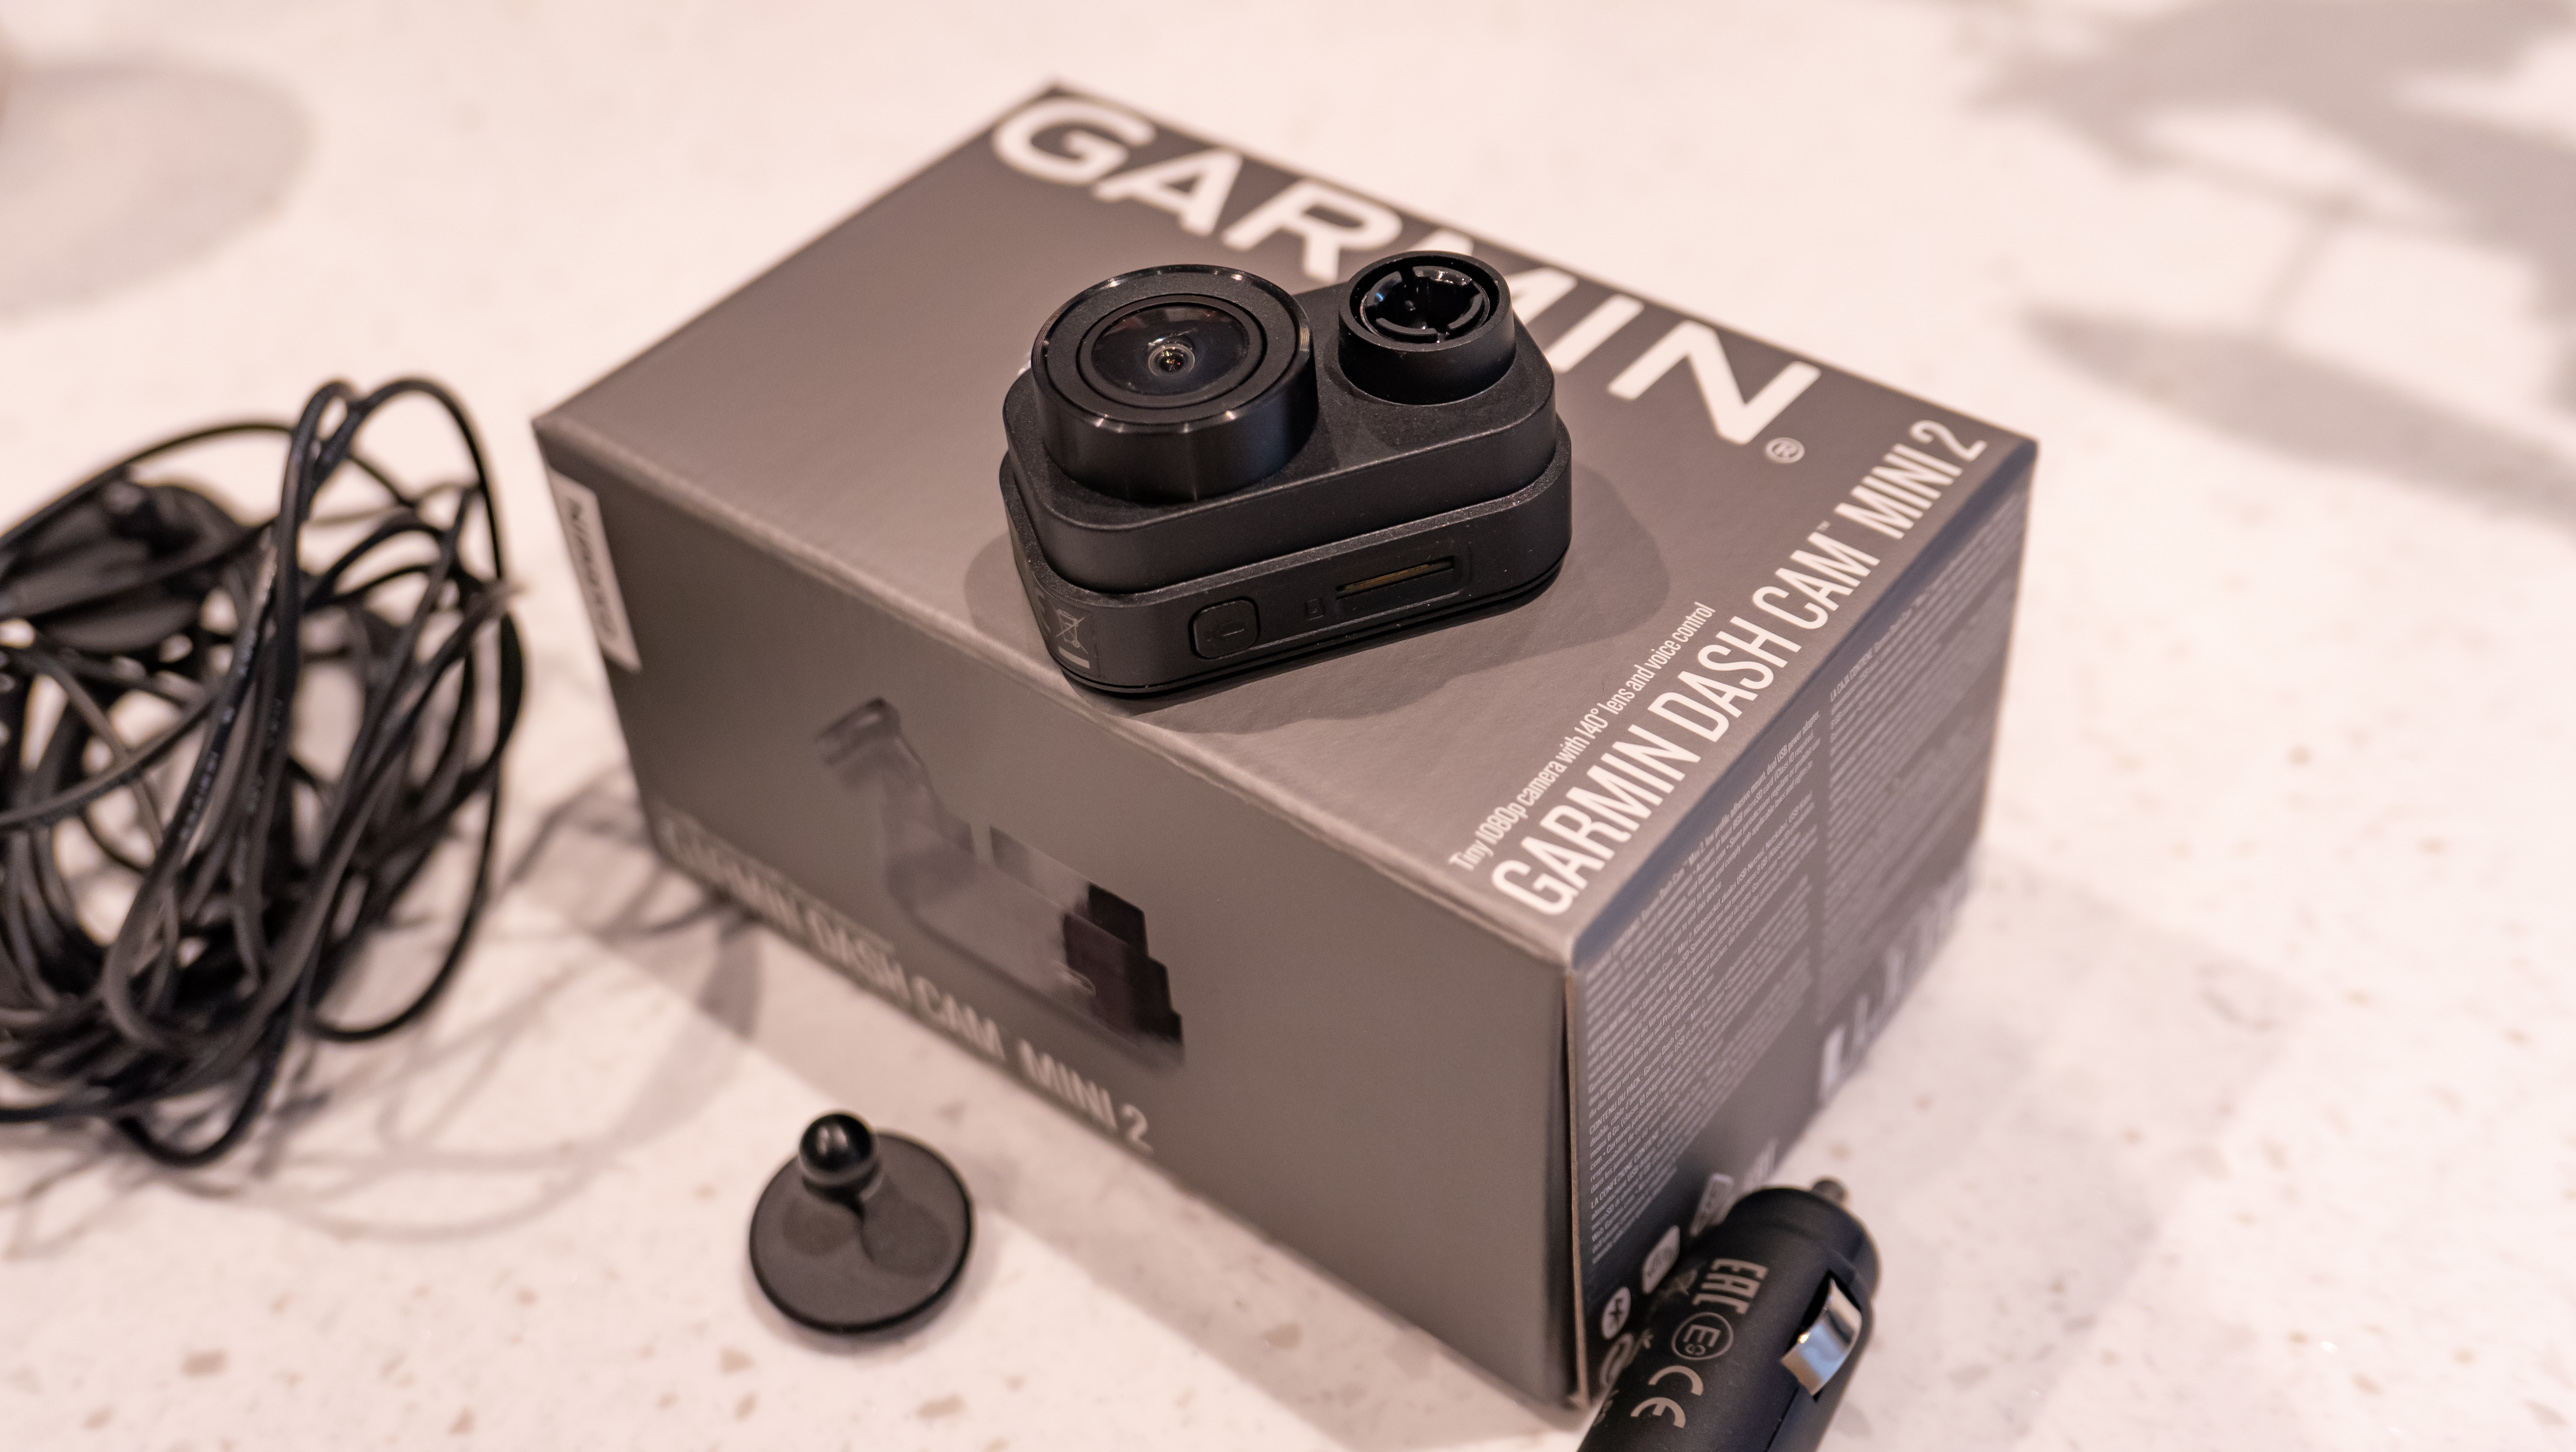 The Garmin Dash Cam Mini 2 next to its box on a table